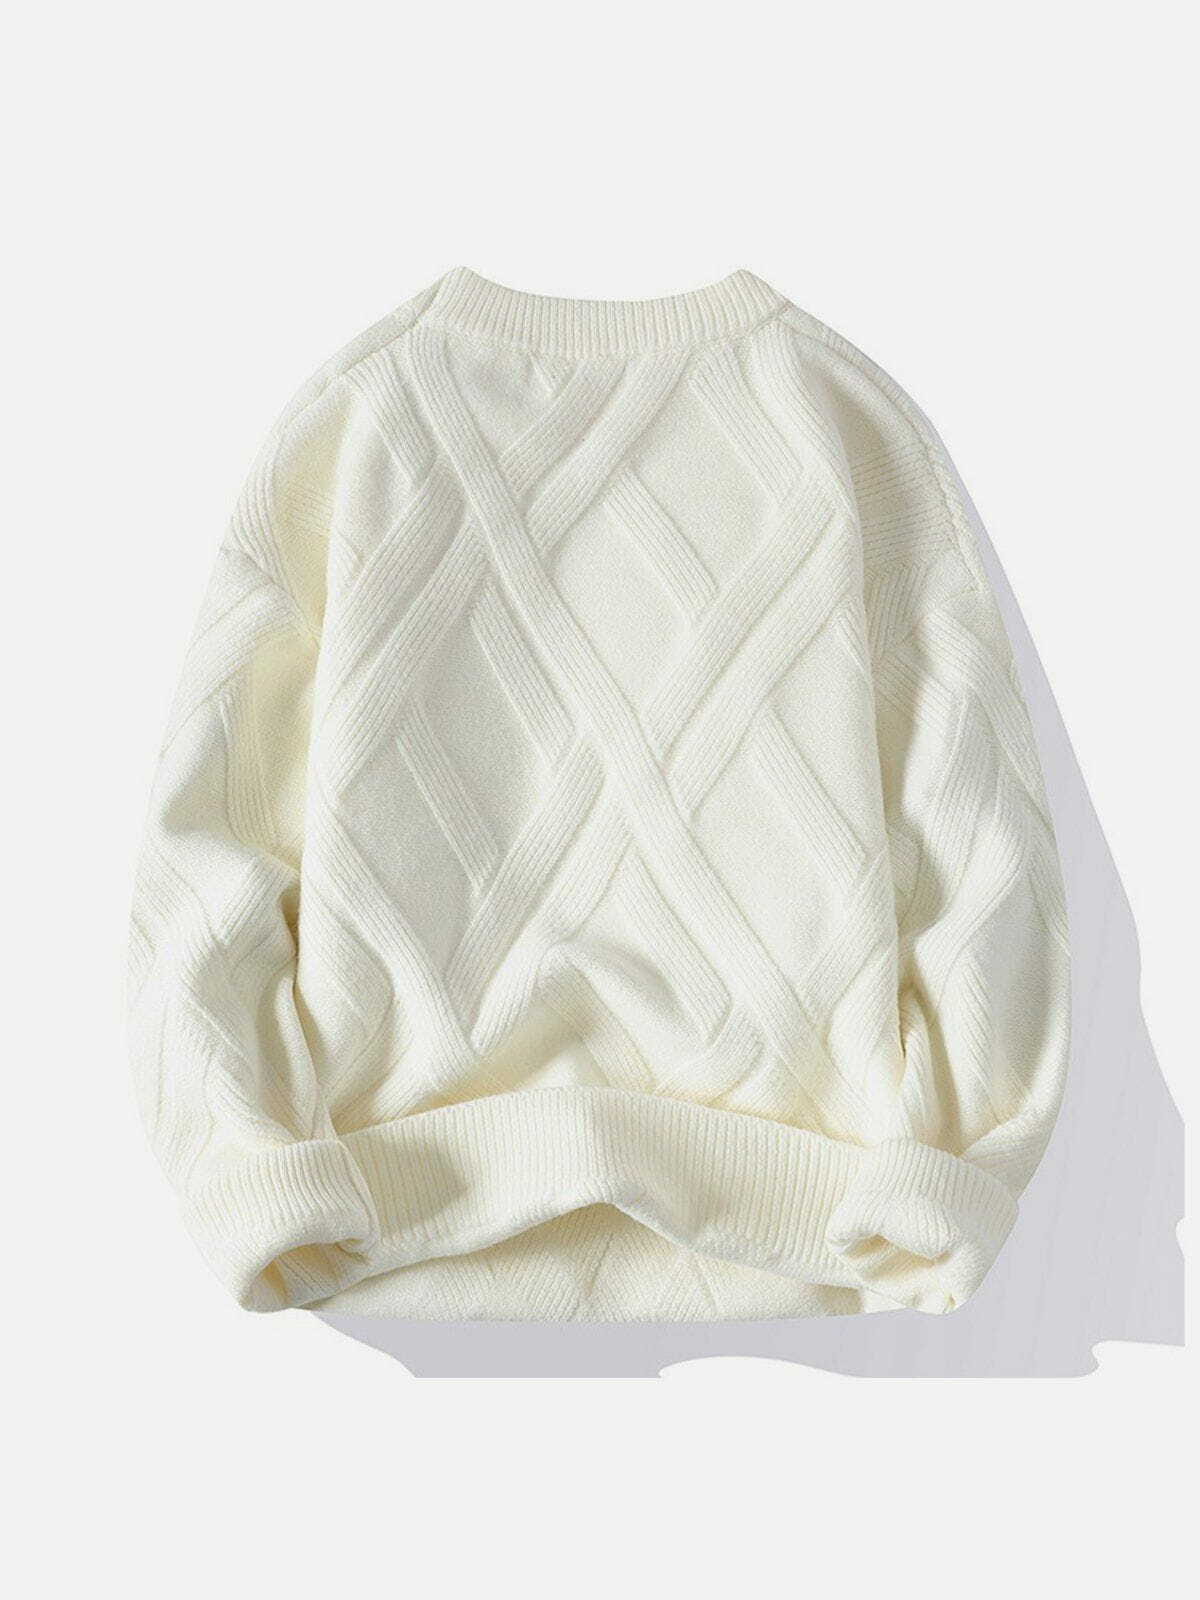 jacquard knit streetwear sweater edgy & retro style 5421